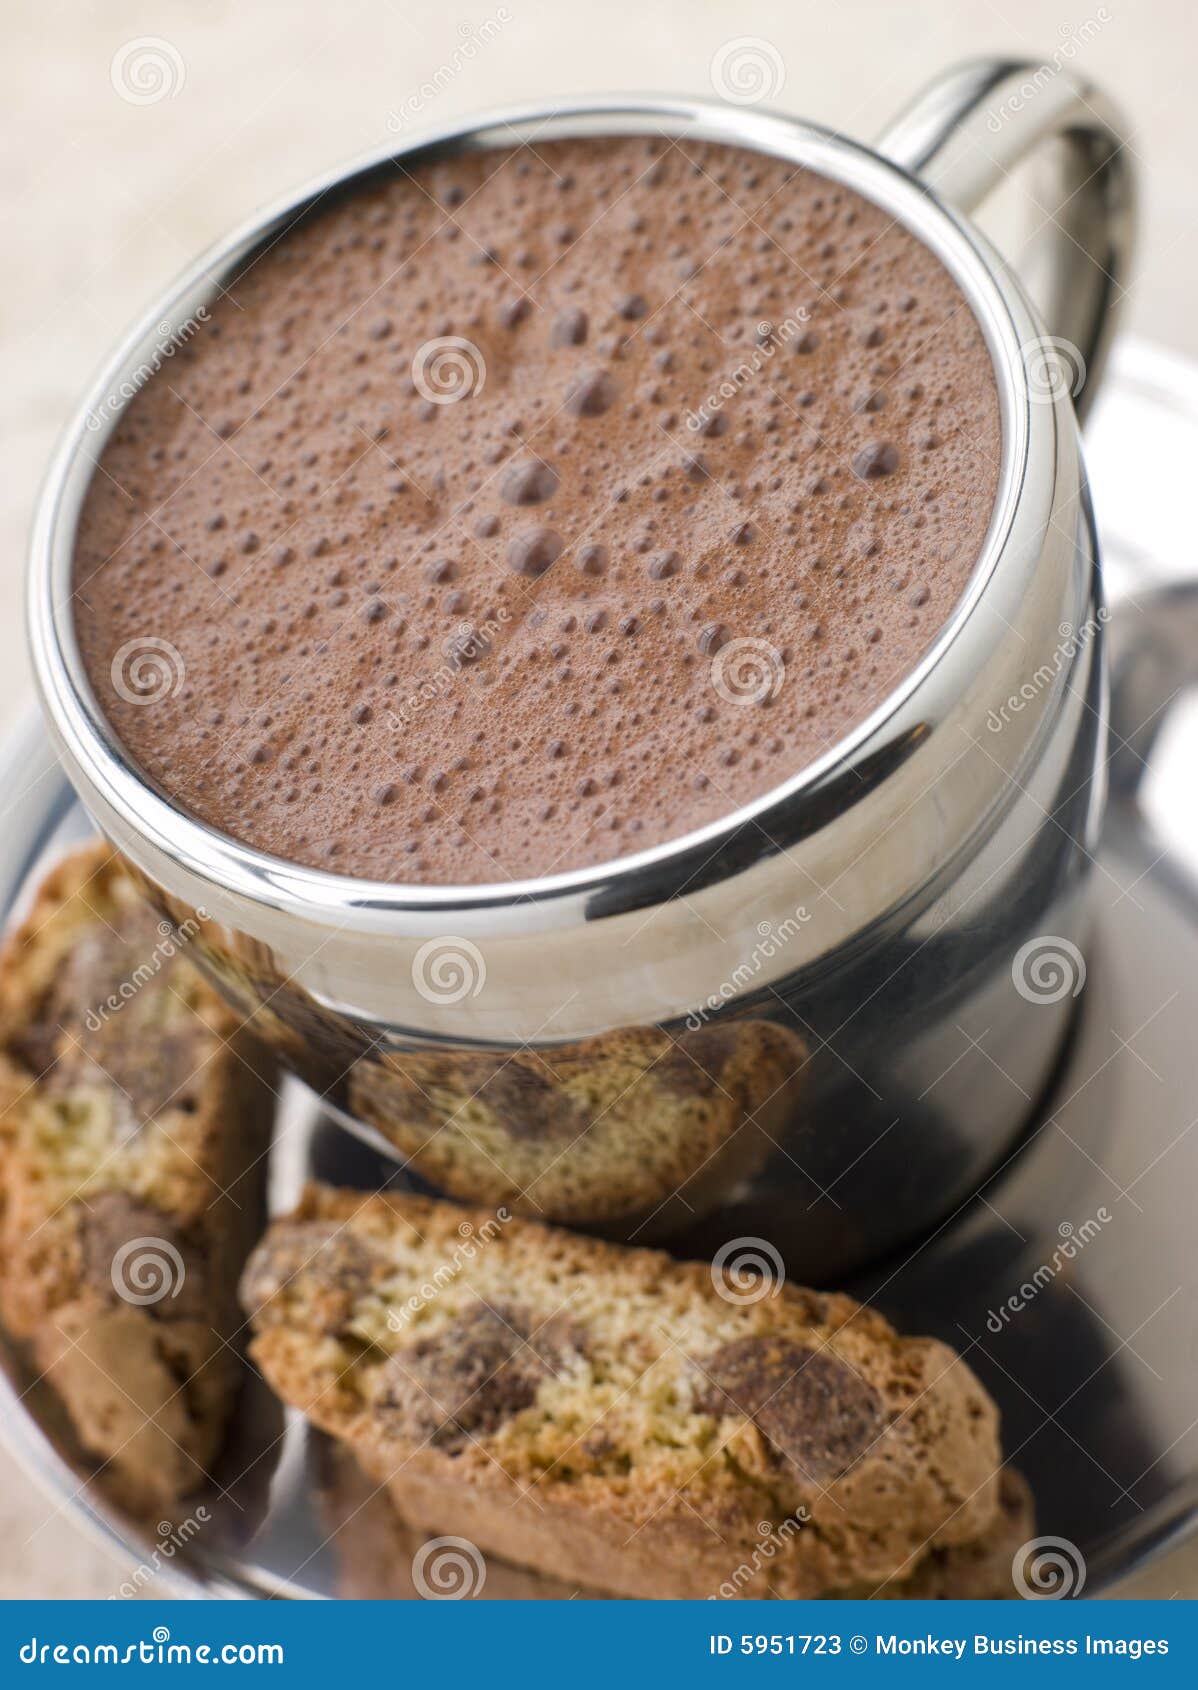 hot chocolate florentine with chocolate biscotti